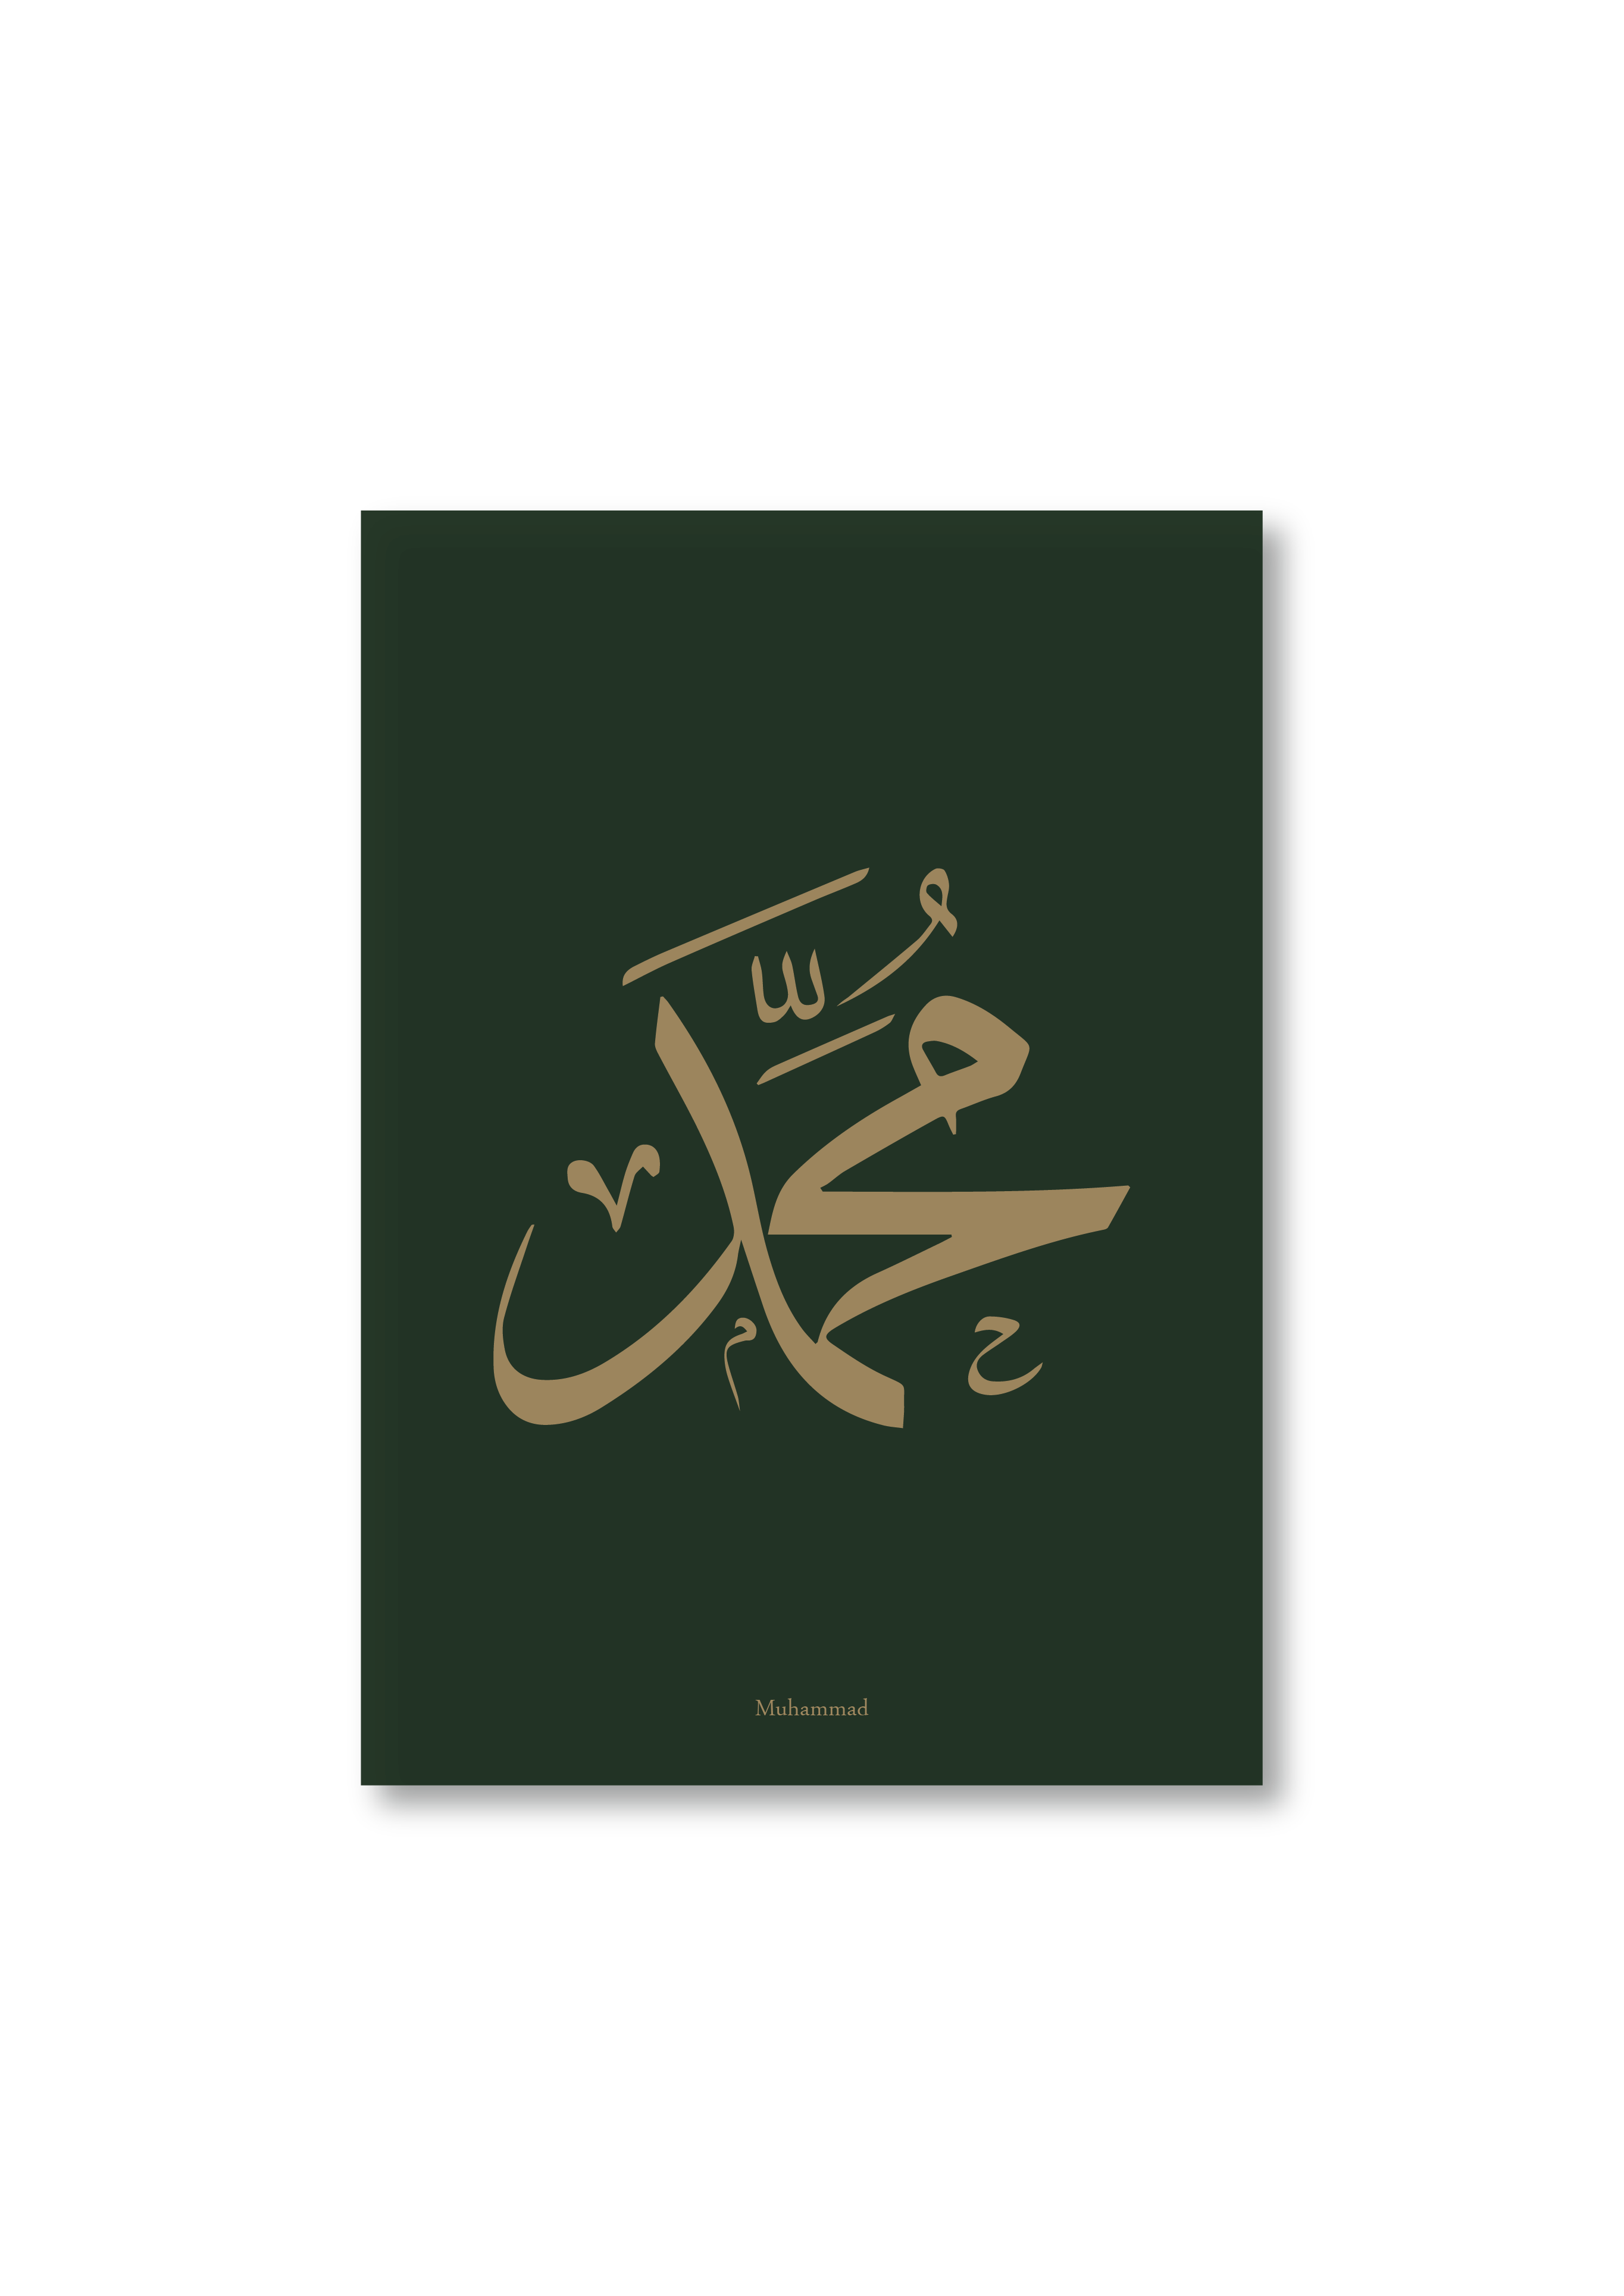 Green & Gold Muhammad Calligraphy Wall Art - Peaceful Arts UK